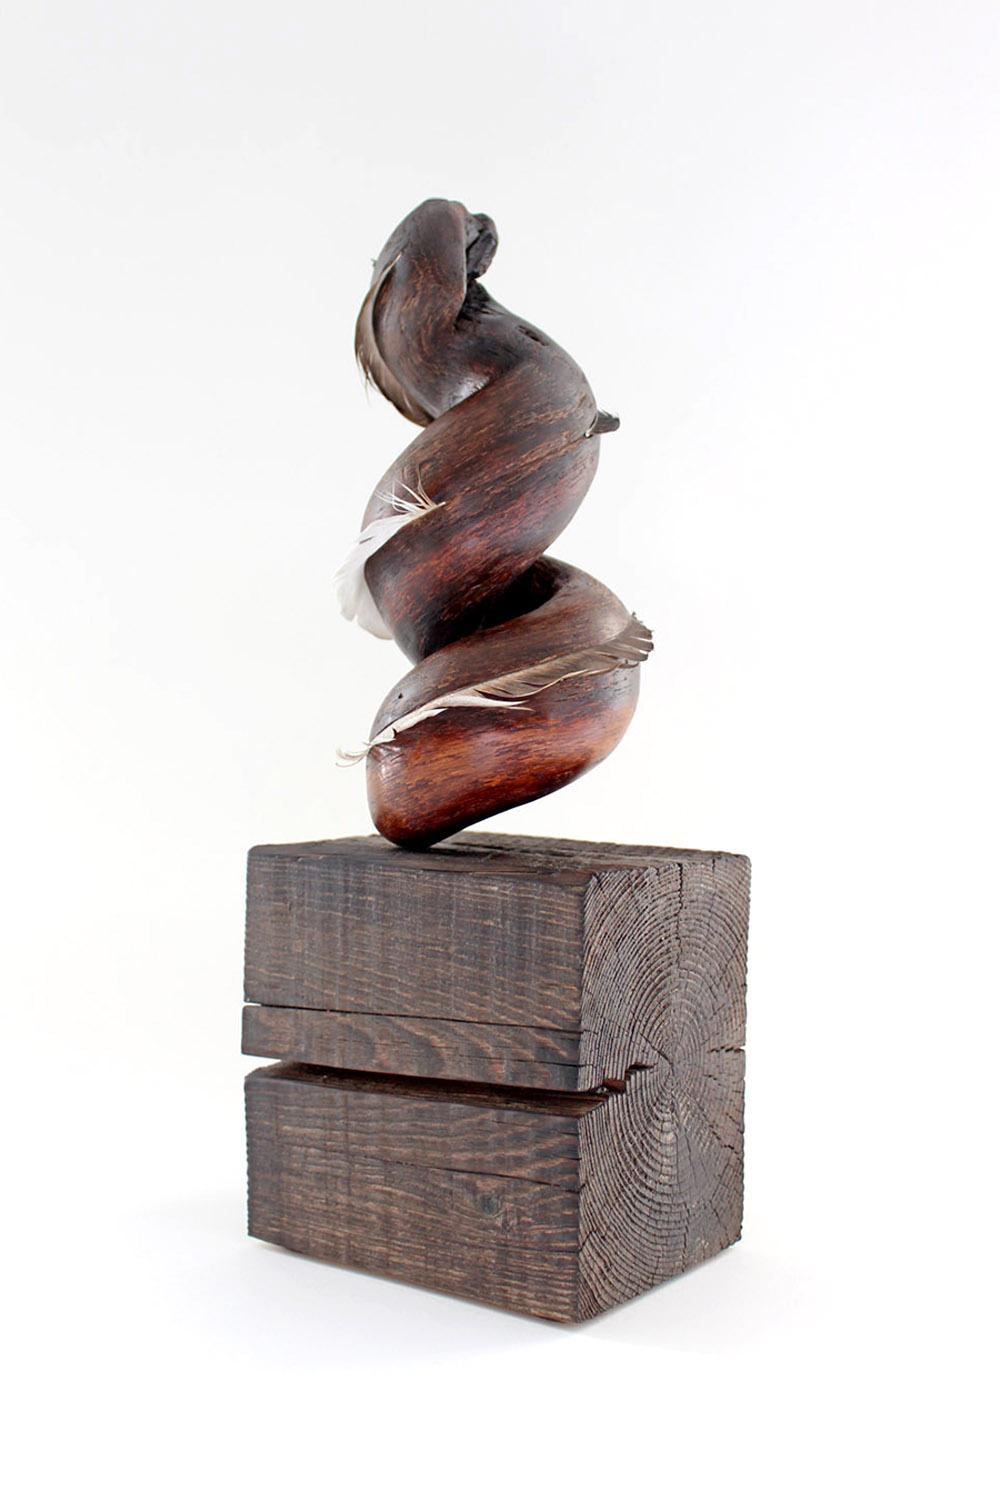 "Whispering Dervish", wood, white oak, feather, hemlock, brown, red, sculpture - Sculpture by Miller Opie